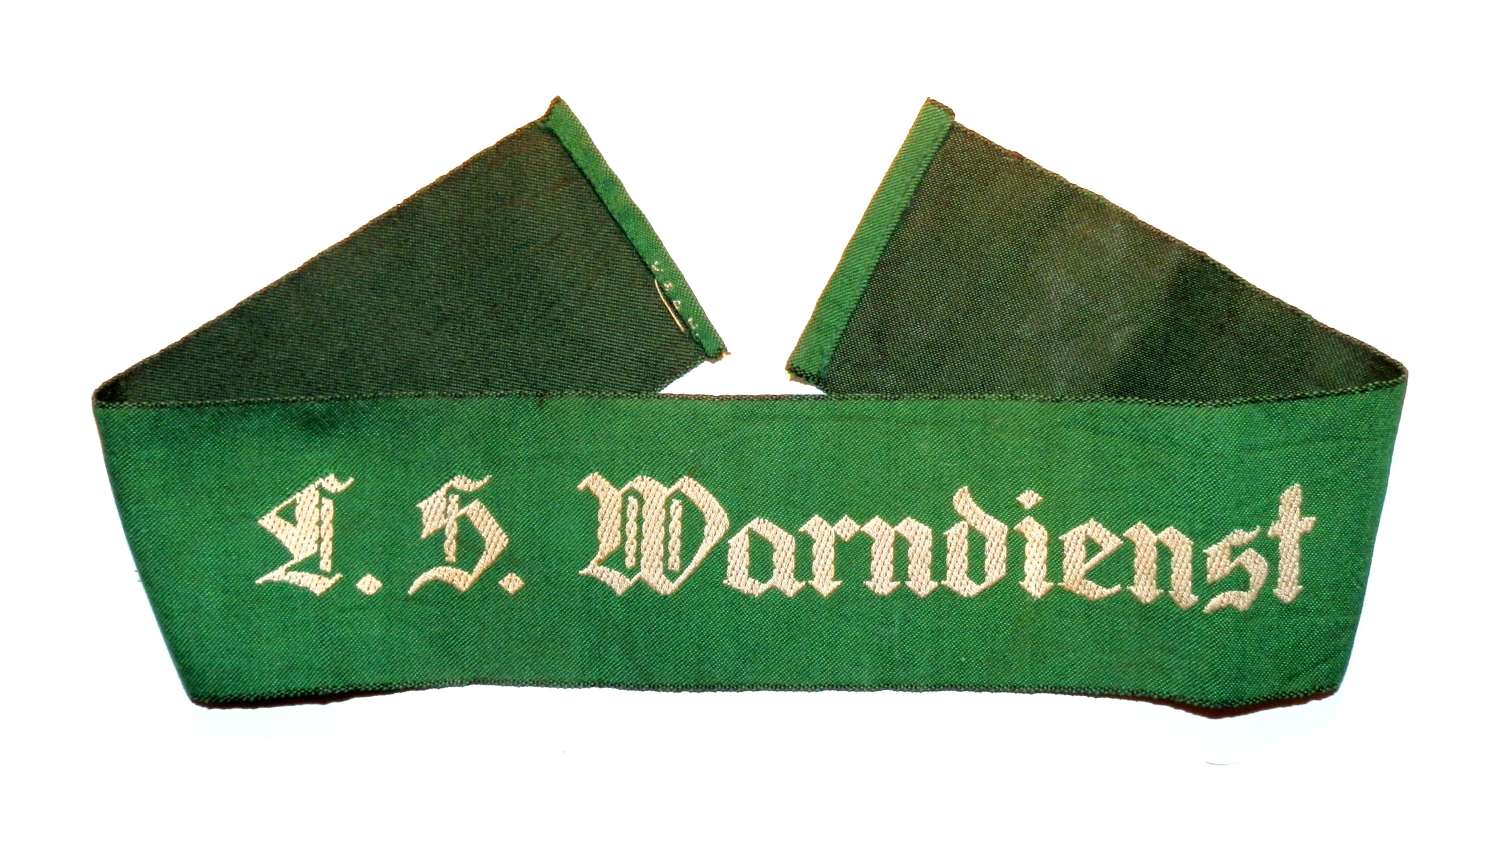 German RLB 'L.S. Warndienst' Cuff Title.